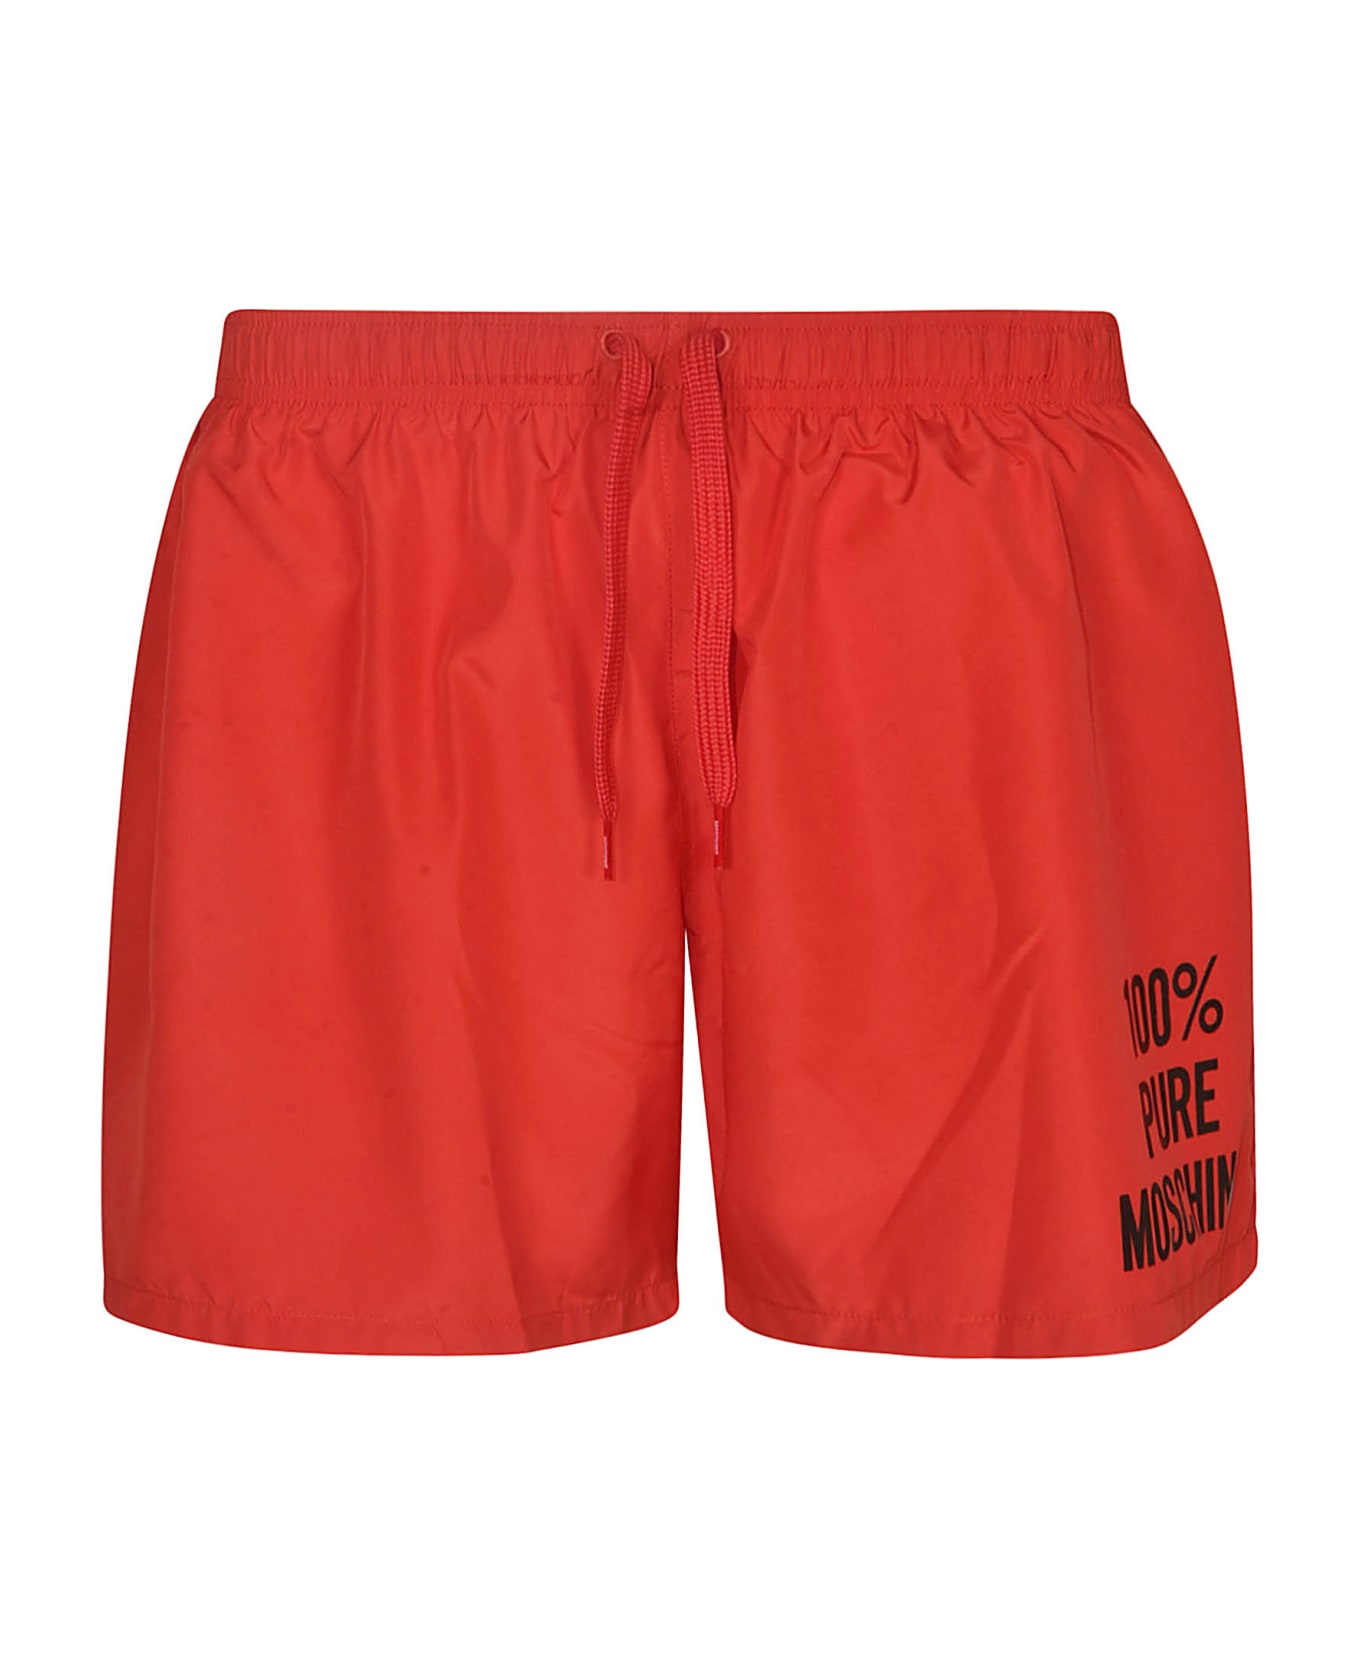 Moschino 100% Pure Shorts - Red